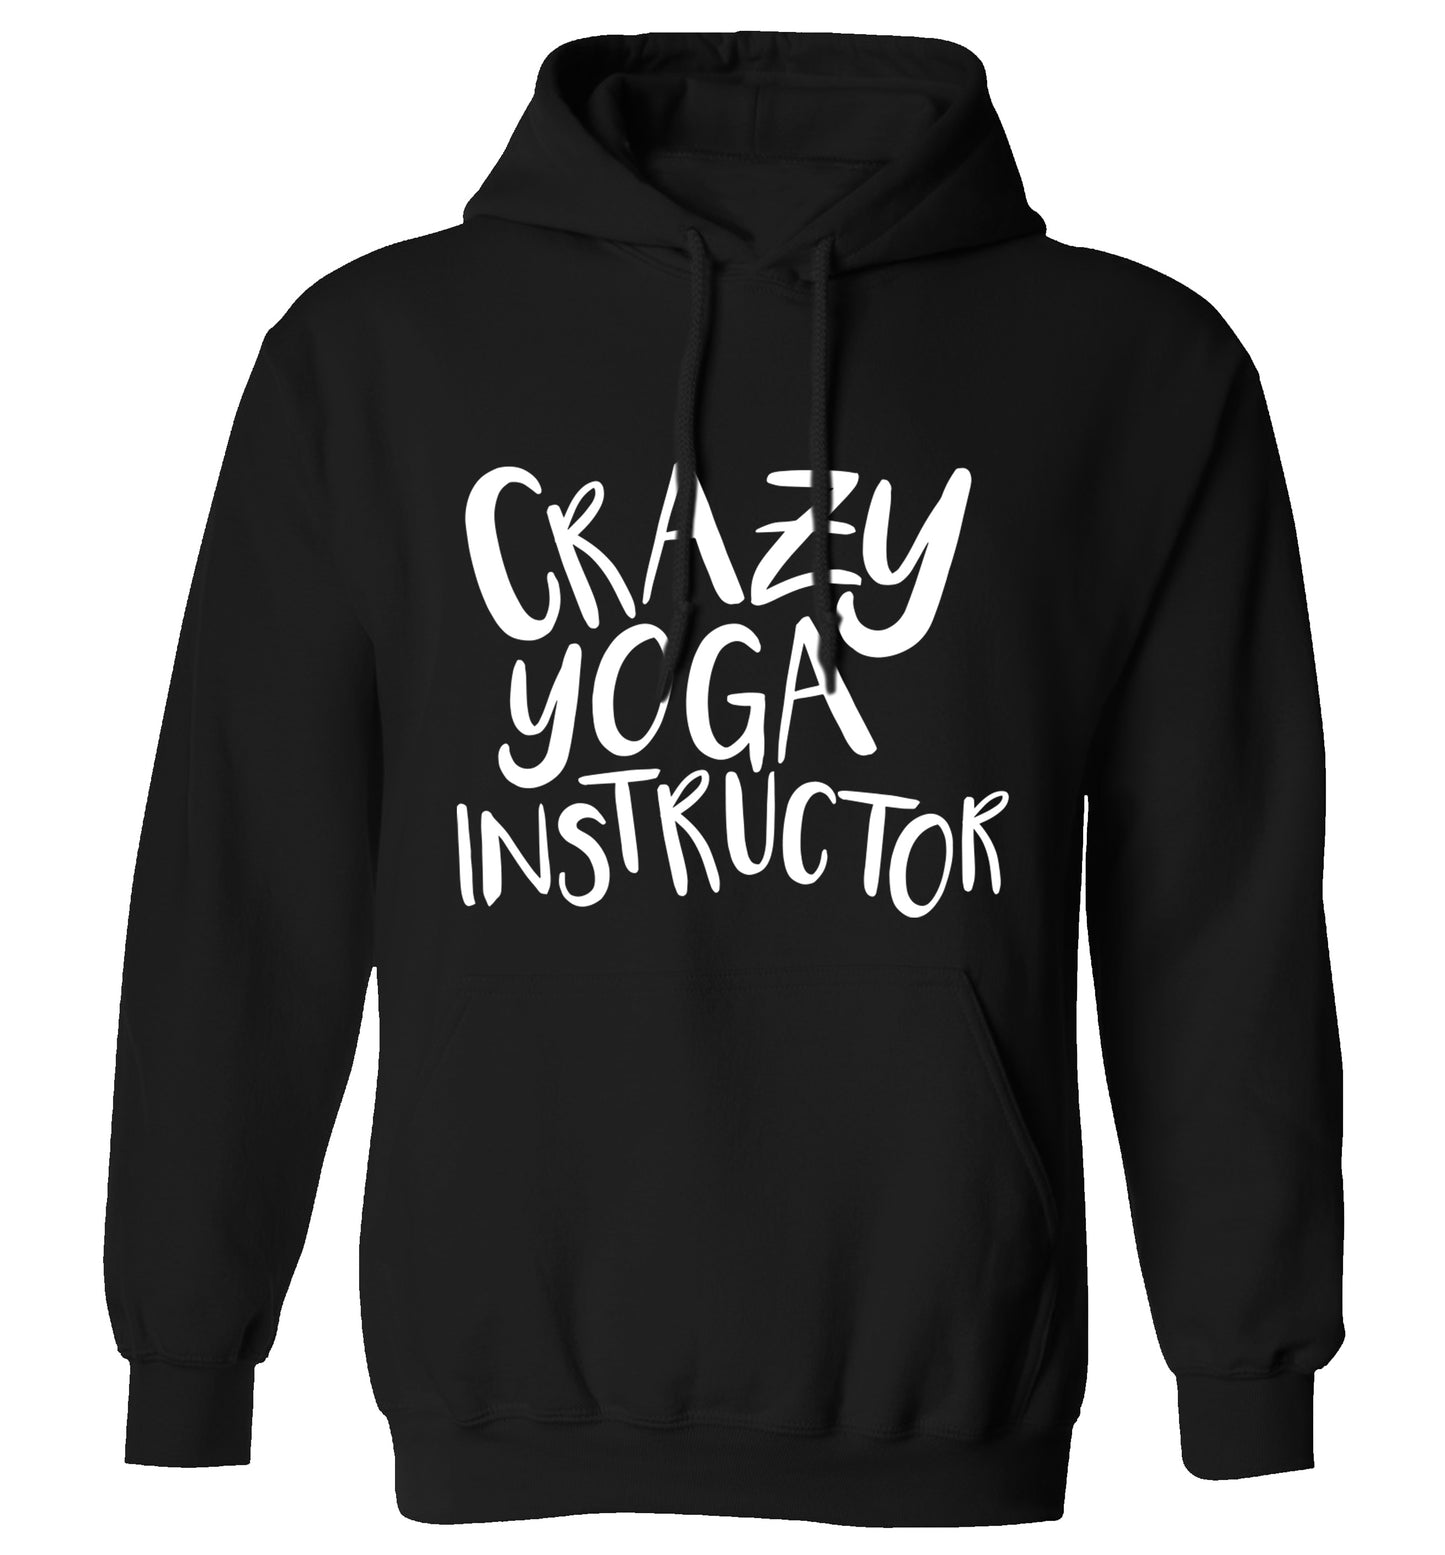 Crazy yoga instructor adults unisex black hoodie 2XL